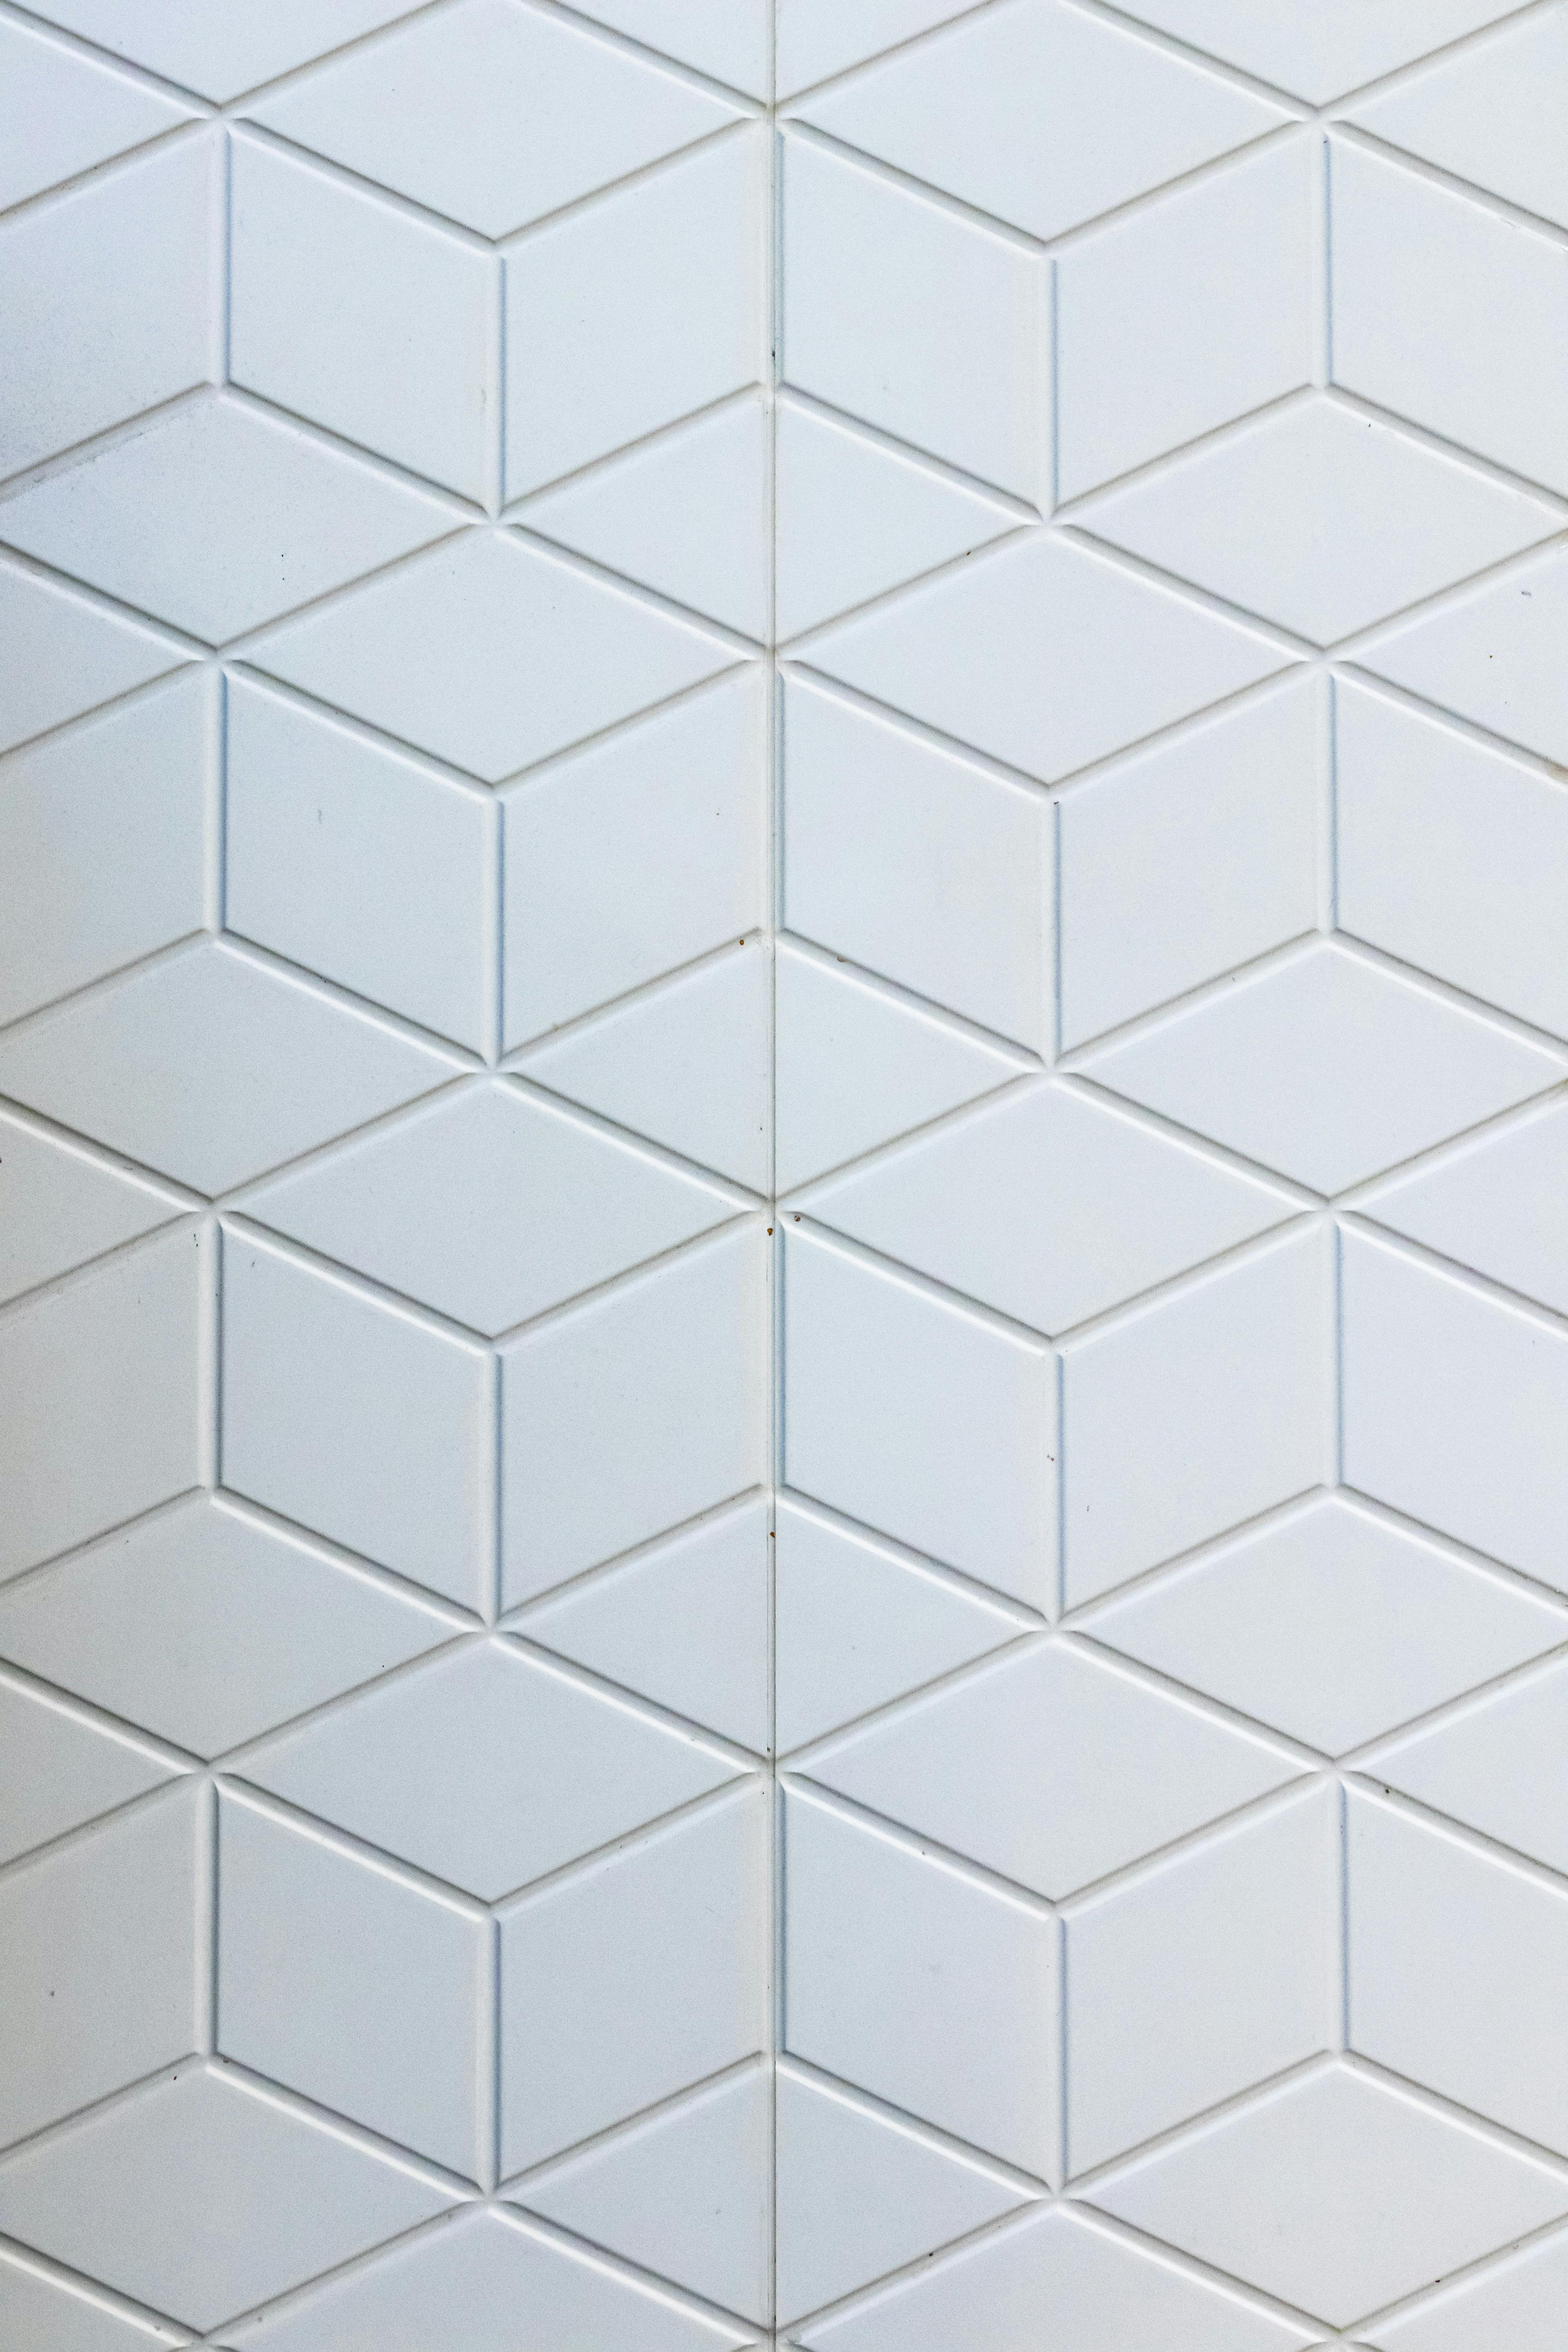 Clean white tile